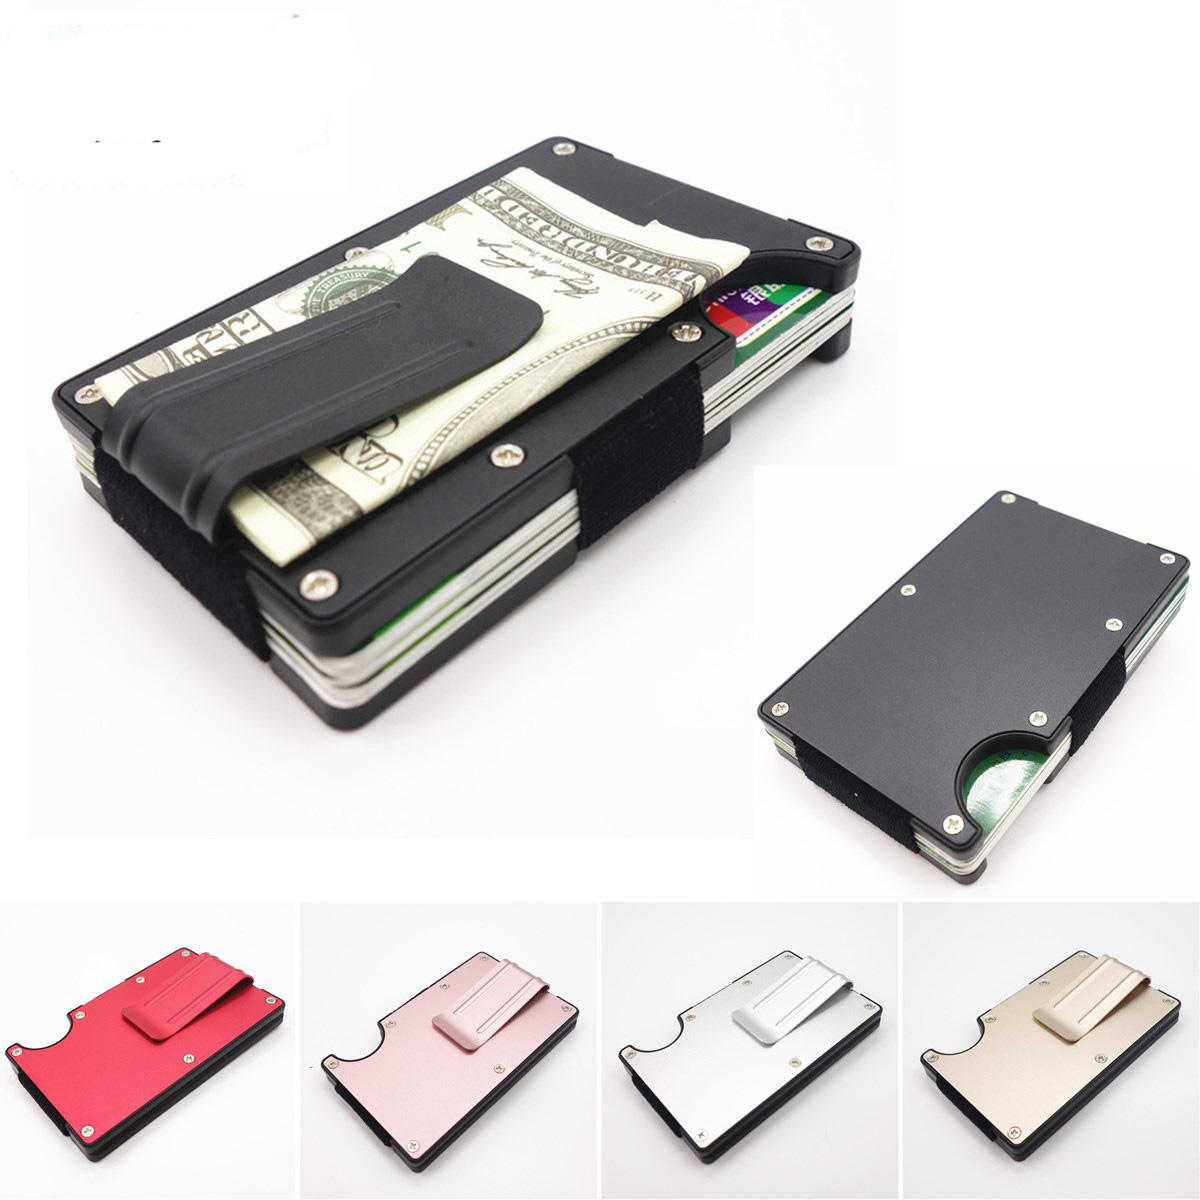 Rfid blocking metal wallet slim minimalist credit card holder money clip Sale - www.semadata.org ...